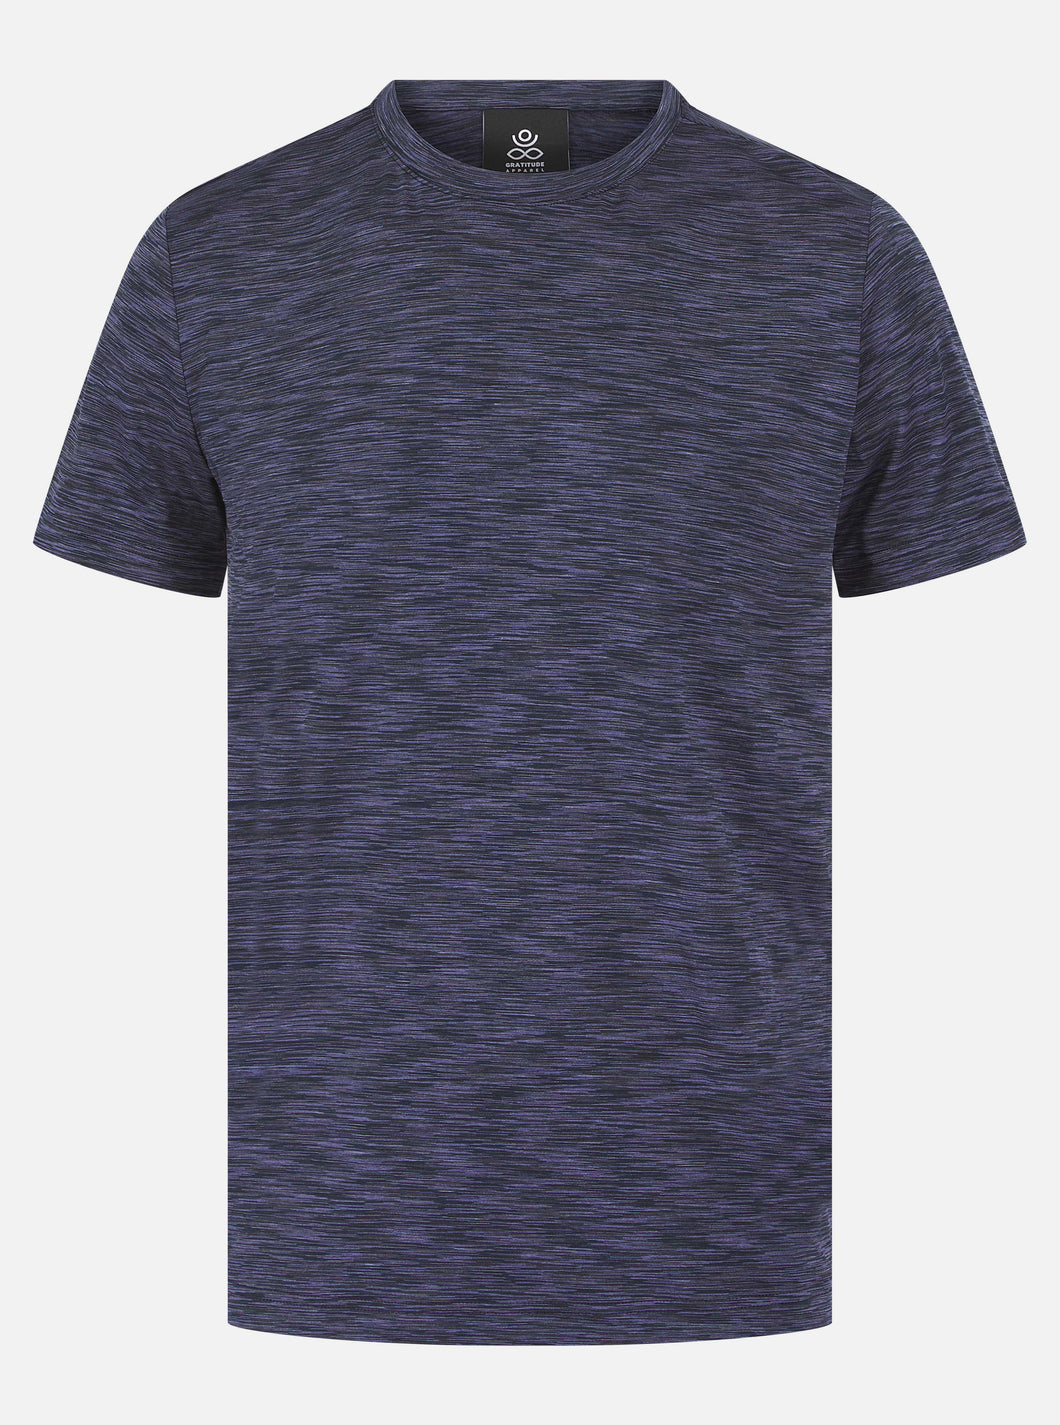 Gratitude New Stripe T Shirt Purple